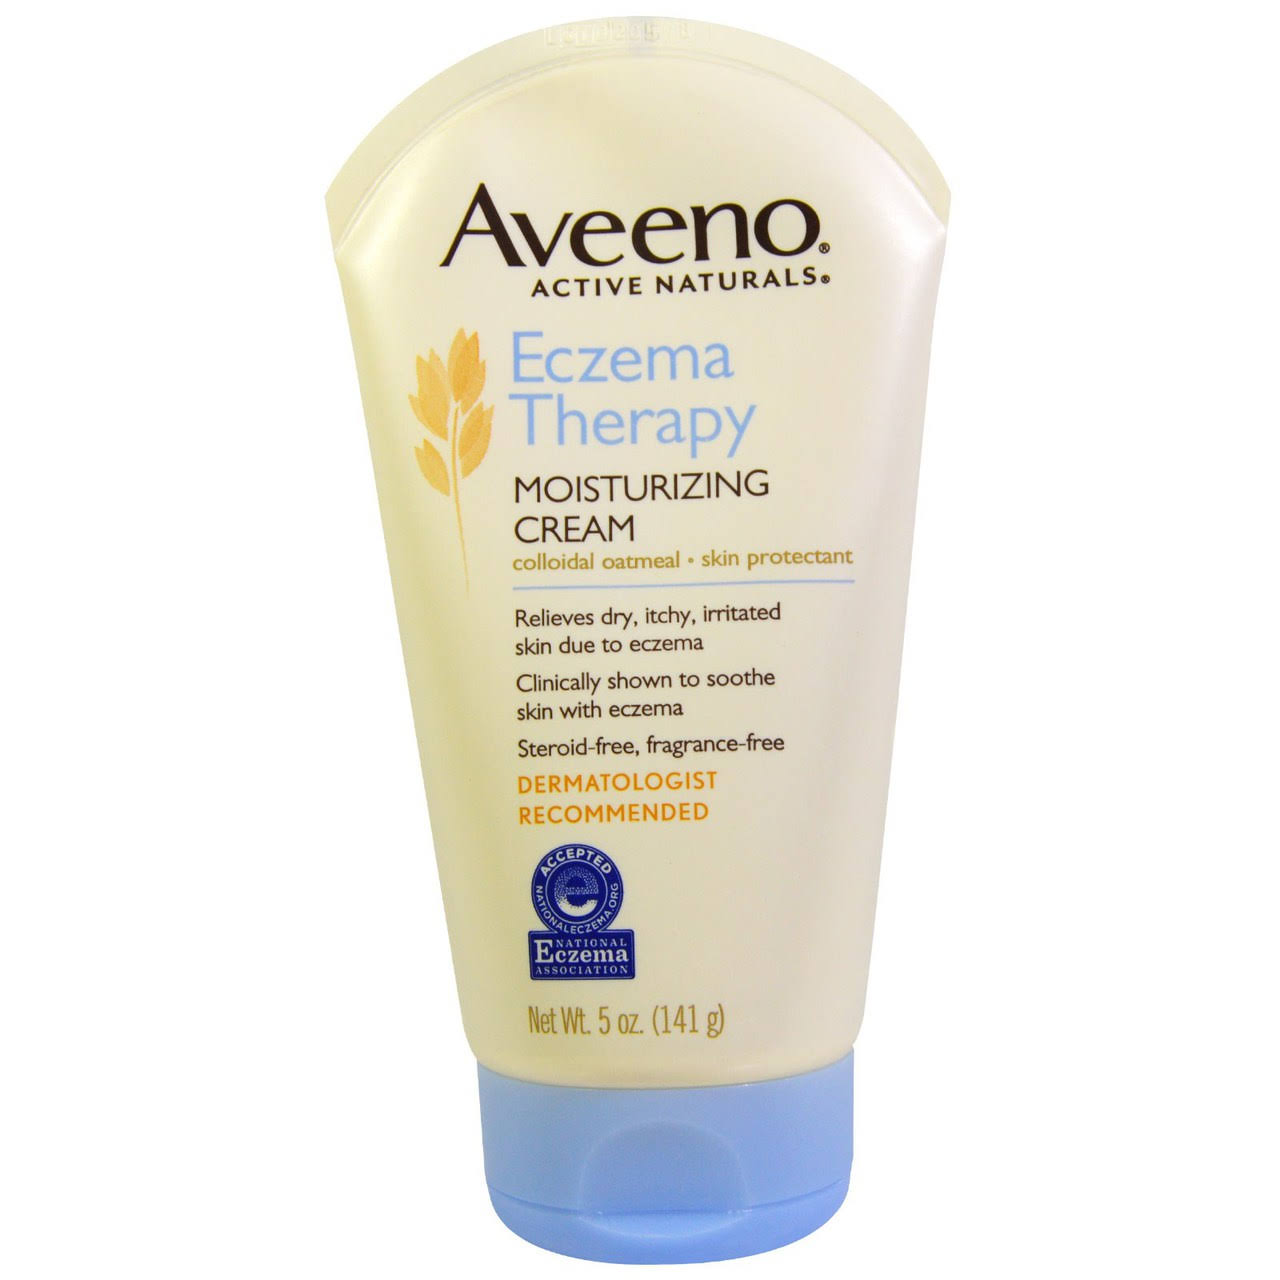 Aveeno Eczema Therapy Moisturizing Cream - 5oz